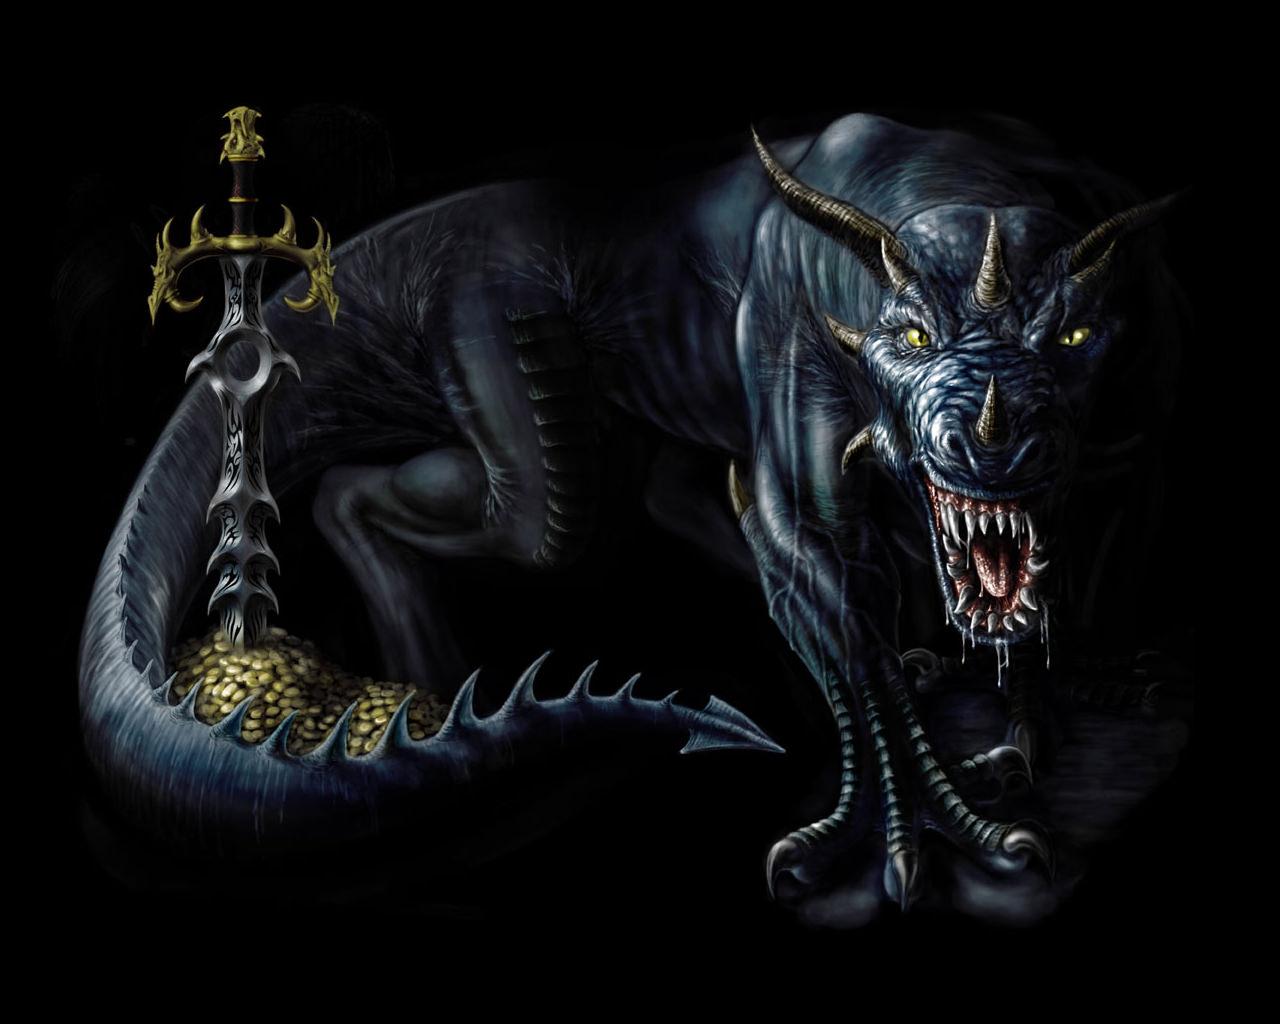 Black Dragon Guarding Sword wallpaper from Dragons wallpaper